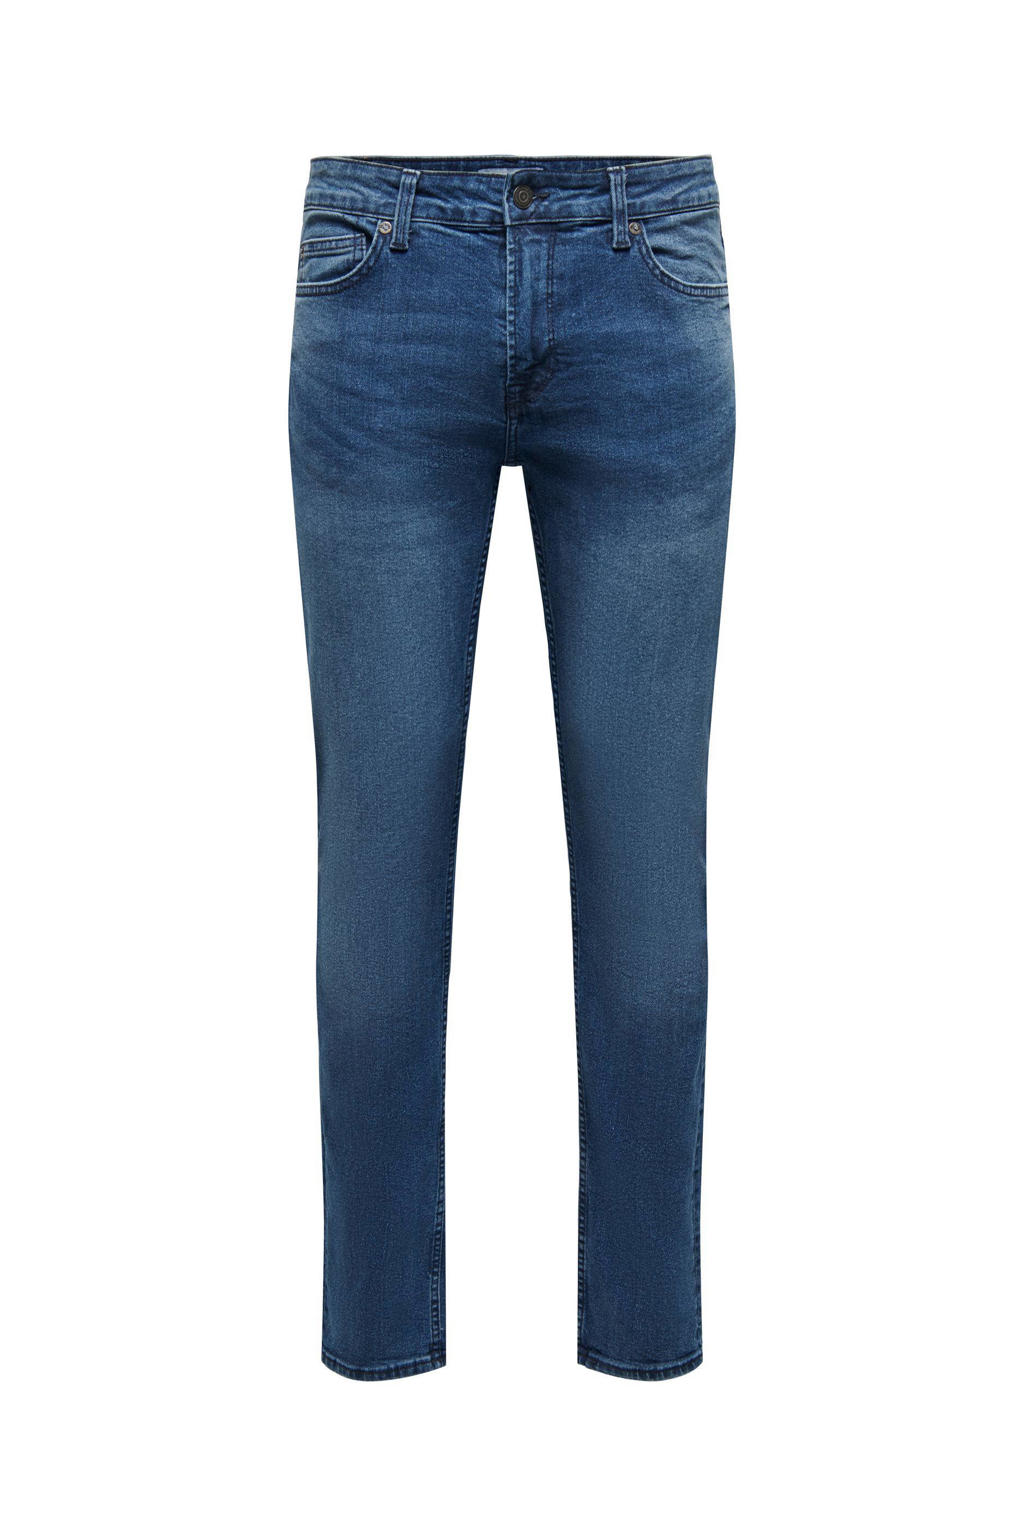 ONLY & SONS slim fit jeans ONSLoom dark blue denim